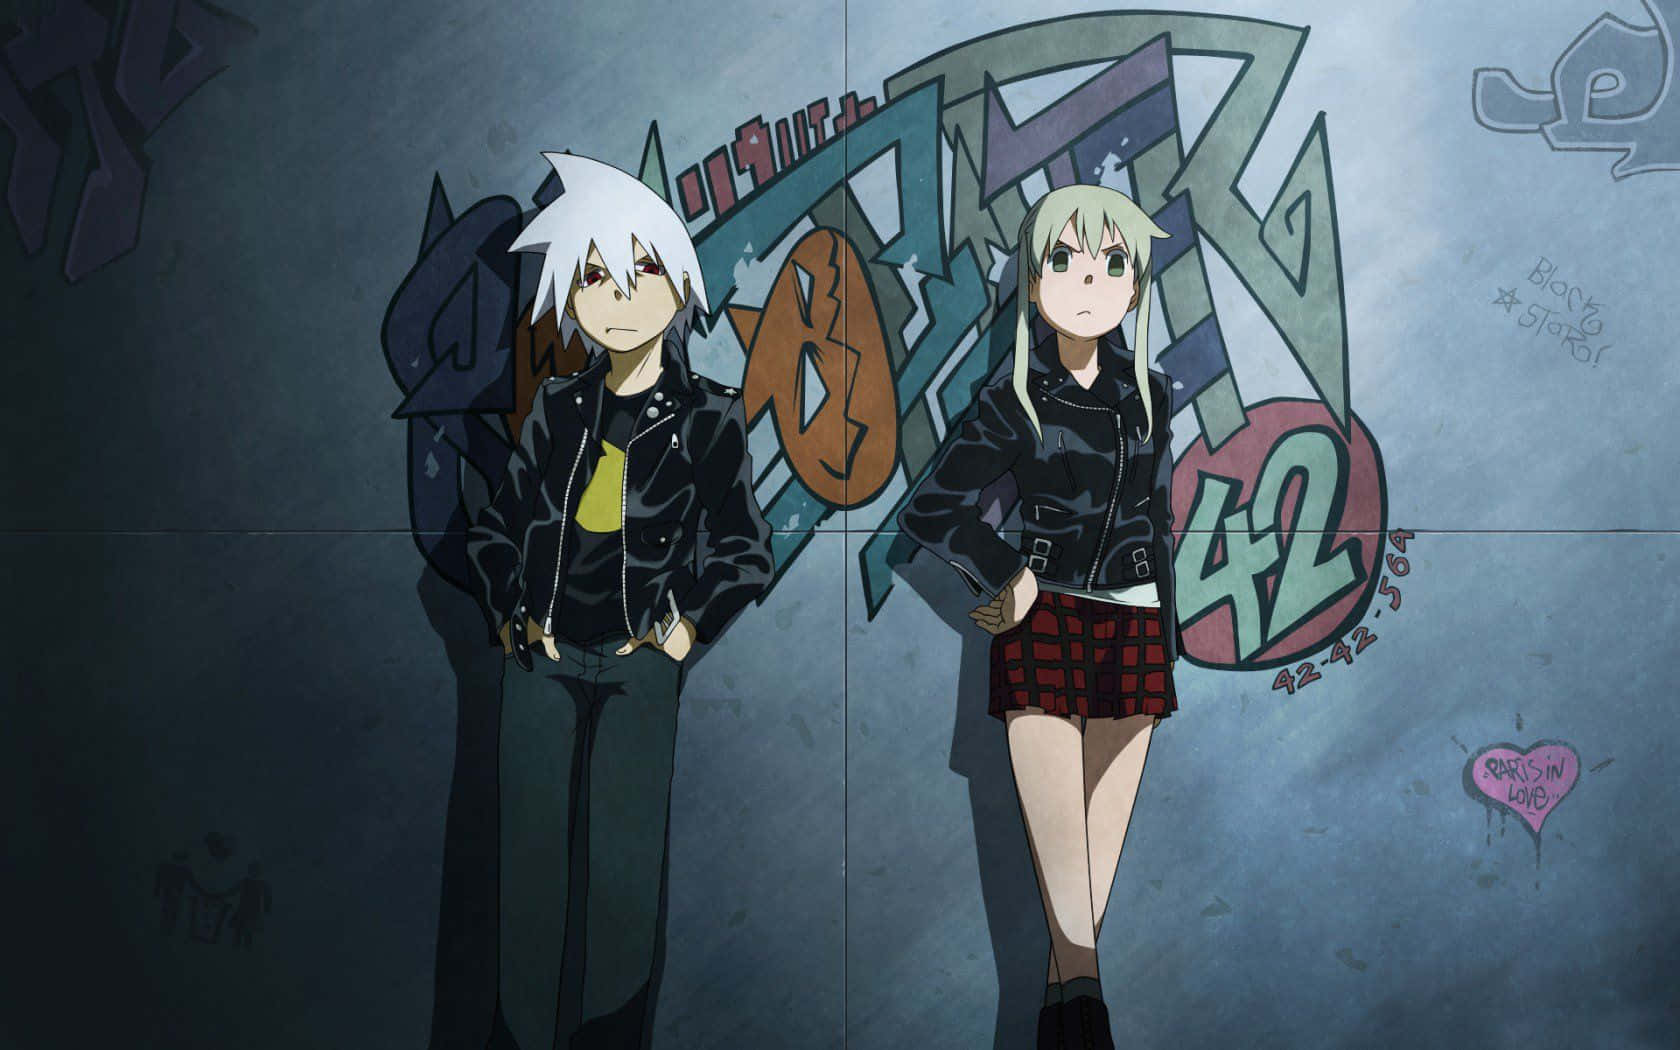 Dospersonajes De Anime Parados Junto A Una Pared Con Grafitis Fondo de pantalla